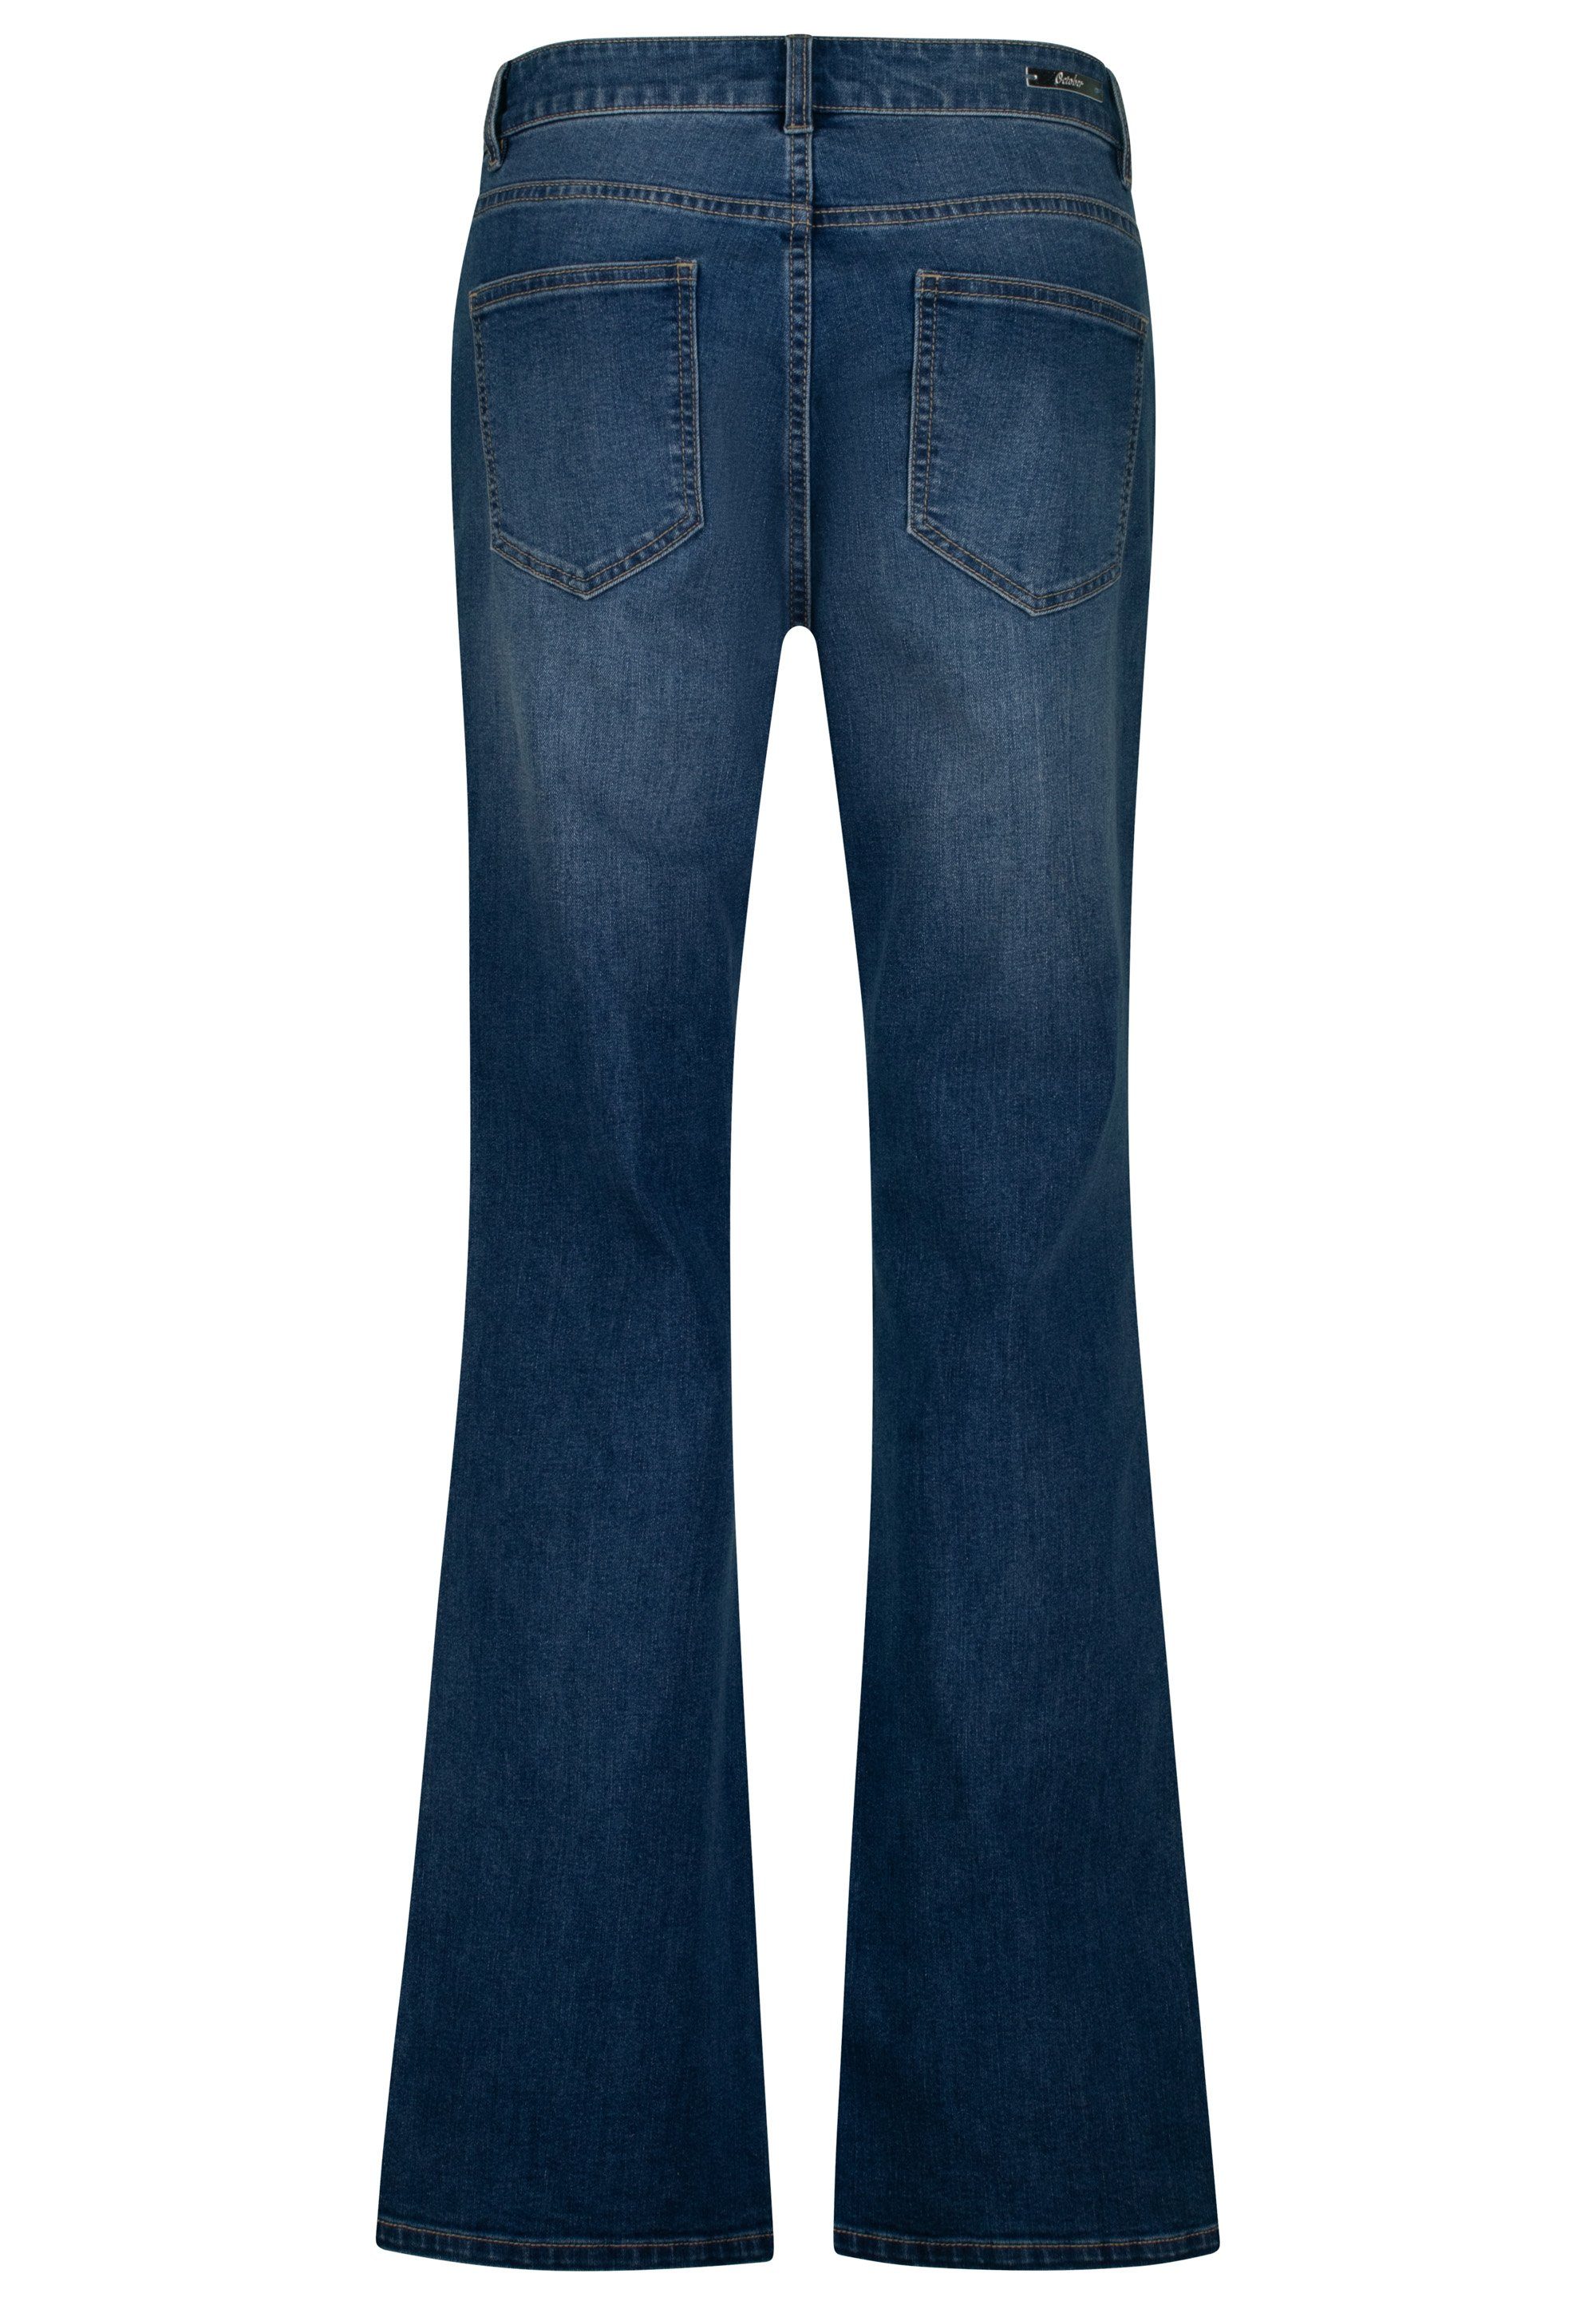 Bootcut-Schnitt October im Bequeme tollen Jeans